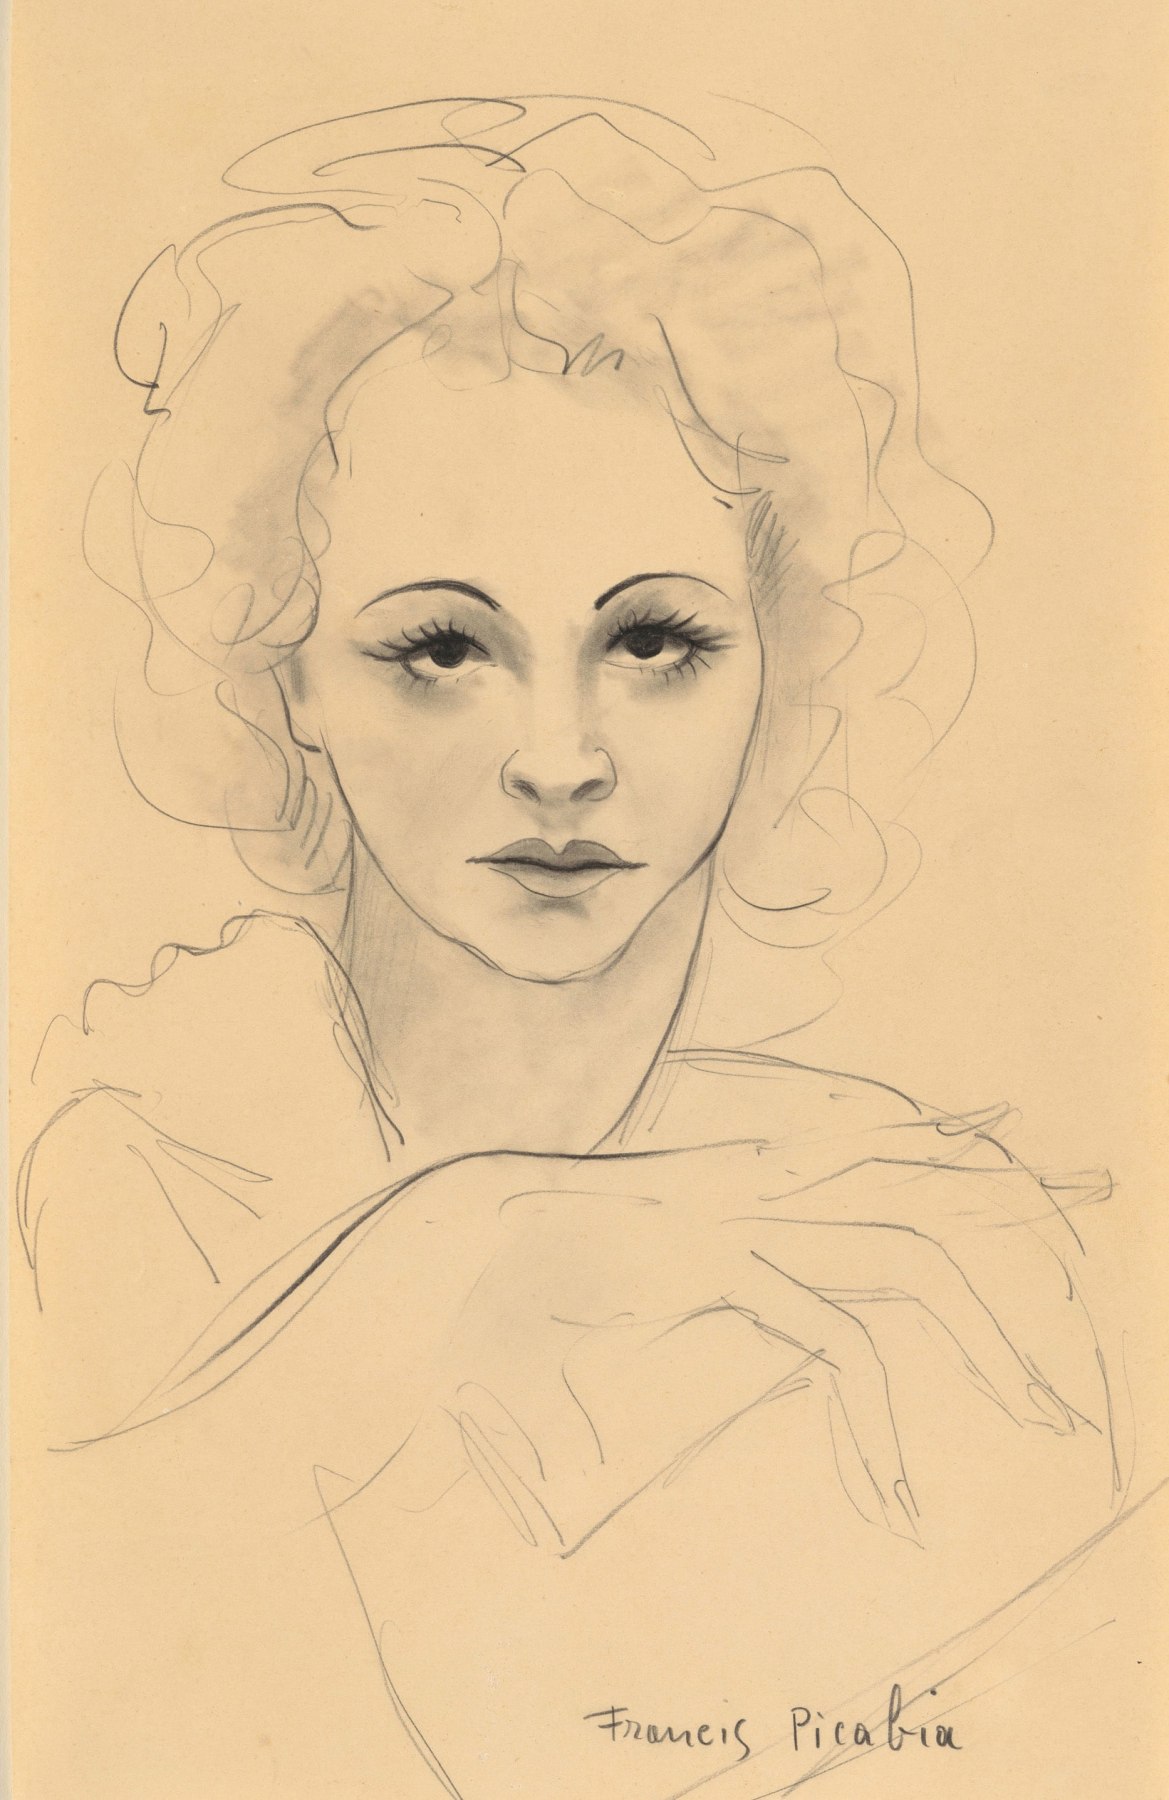 Francis Picabia

&amp;ldquo;Untitled&amp;rdquo;, ca. 1940&amp;ndash;1942

Pencil on paper

13 3/4 x 8 3/4 inches

35 x 22 cm

PIZ 154
$120,000